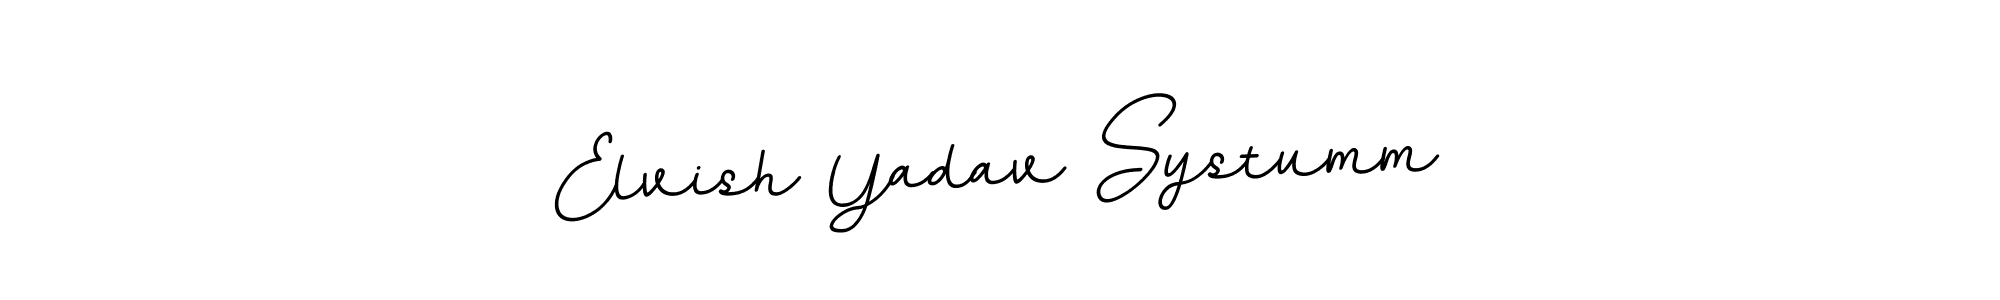 How to Draw Elvish Yadav Systumm signature style? BallpointsItalic-DORy9 is a latest design signature styles for name Elvish Yadav Systumm. Elvish Yadav Systumm signature style 11 images and pictures png